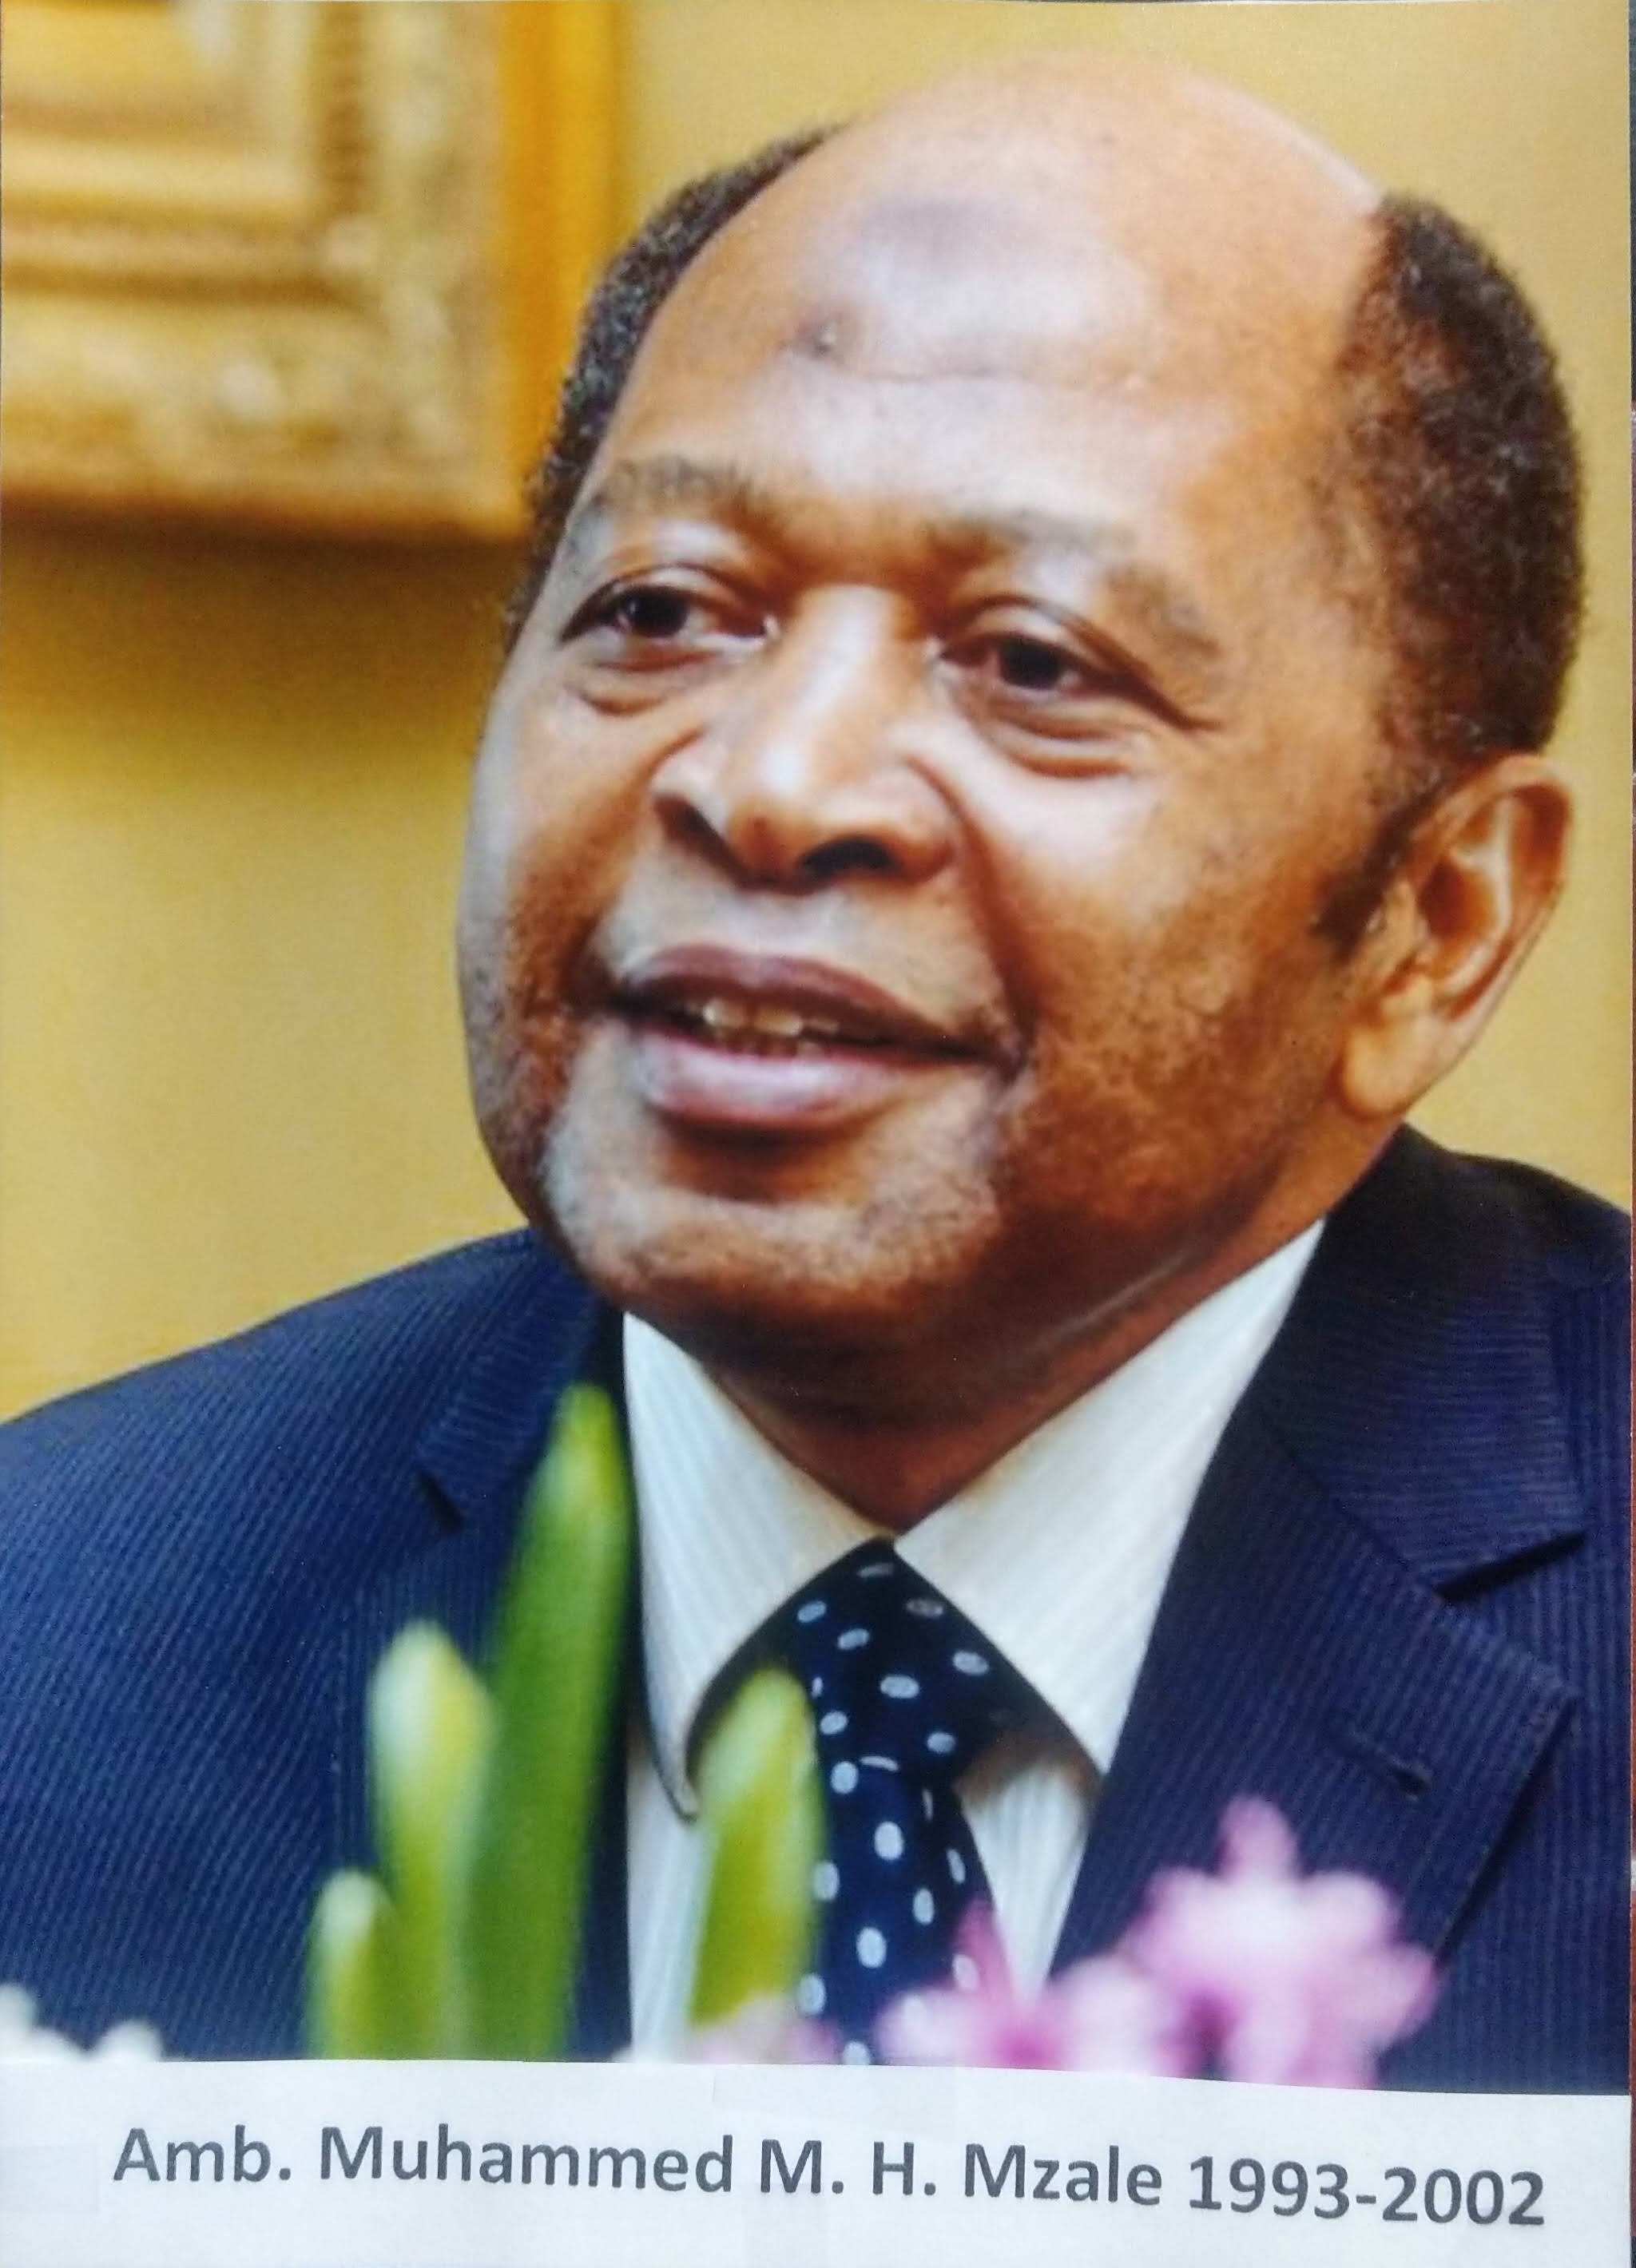 H.E. Muhammed M. H. Mzale - Ambassador